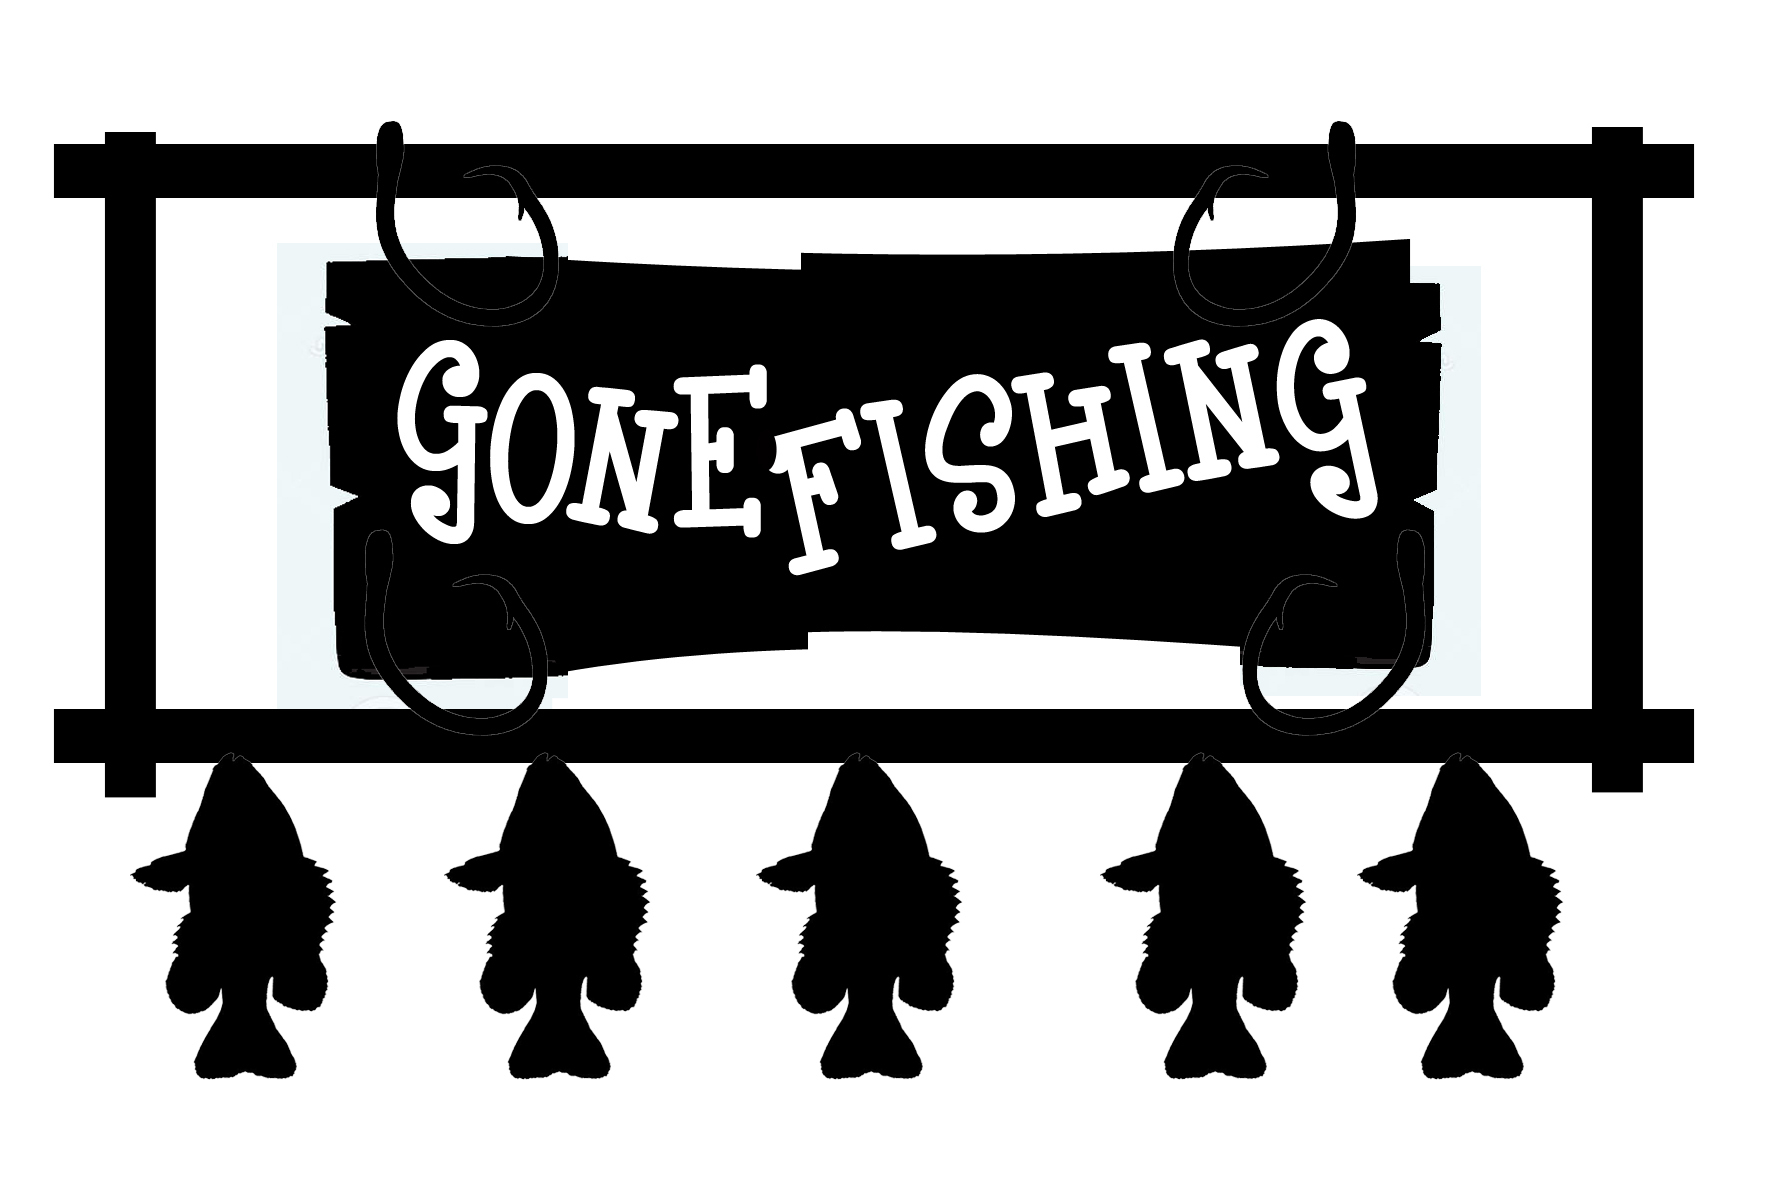 Printable Gone Fishing Sign